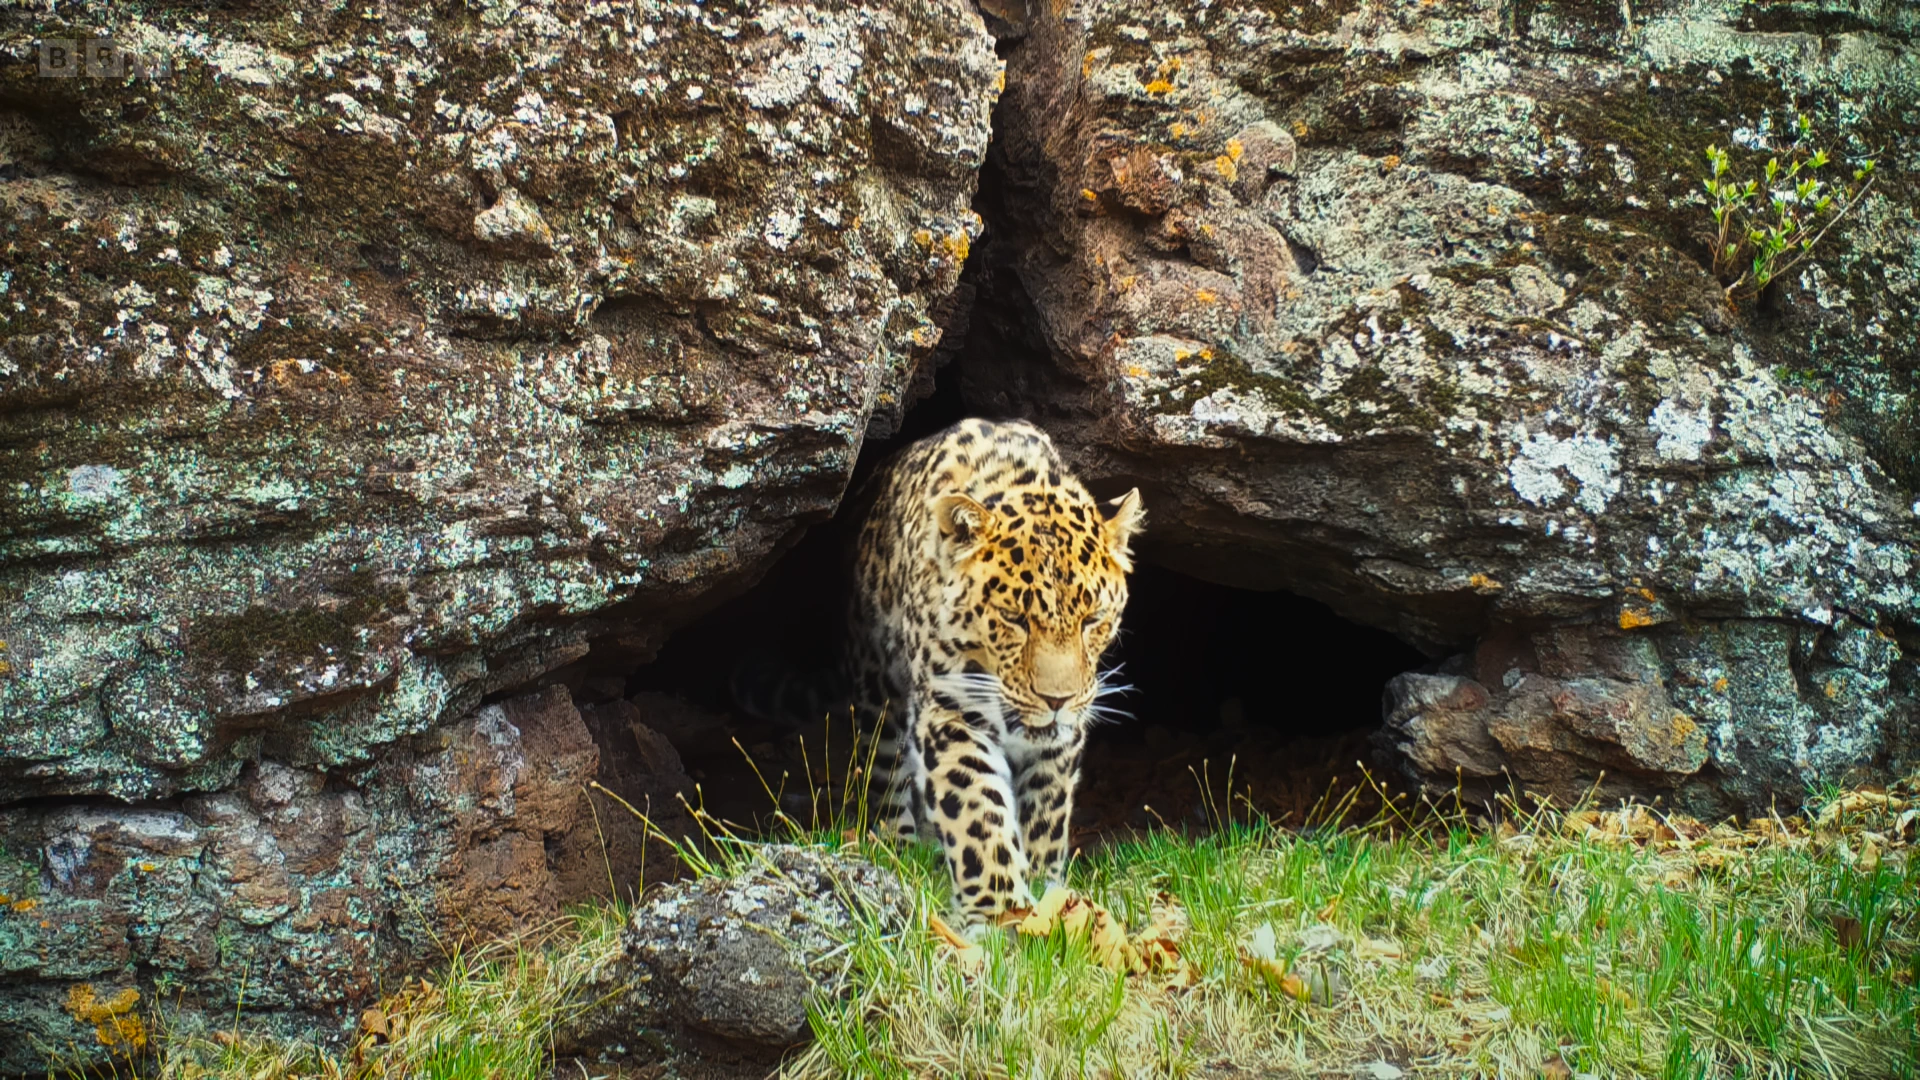 Amur leopard (Panthera pardus orientalis) as shown in Frozen Planet II - Frozen Lands